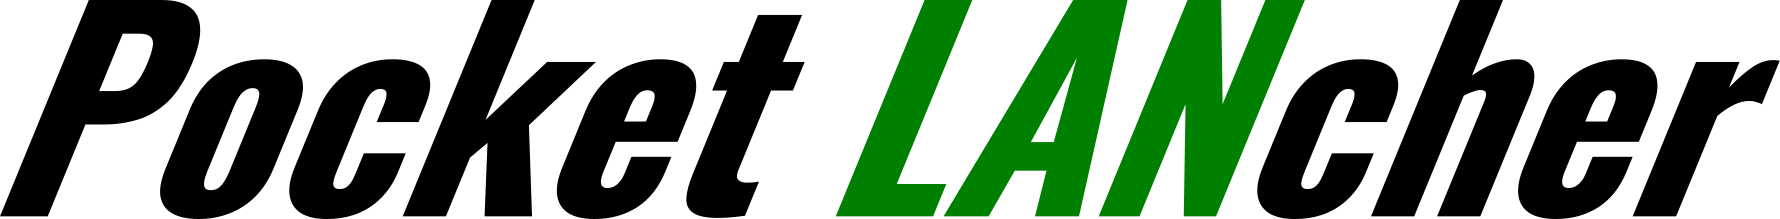 Pocket LANcher logo